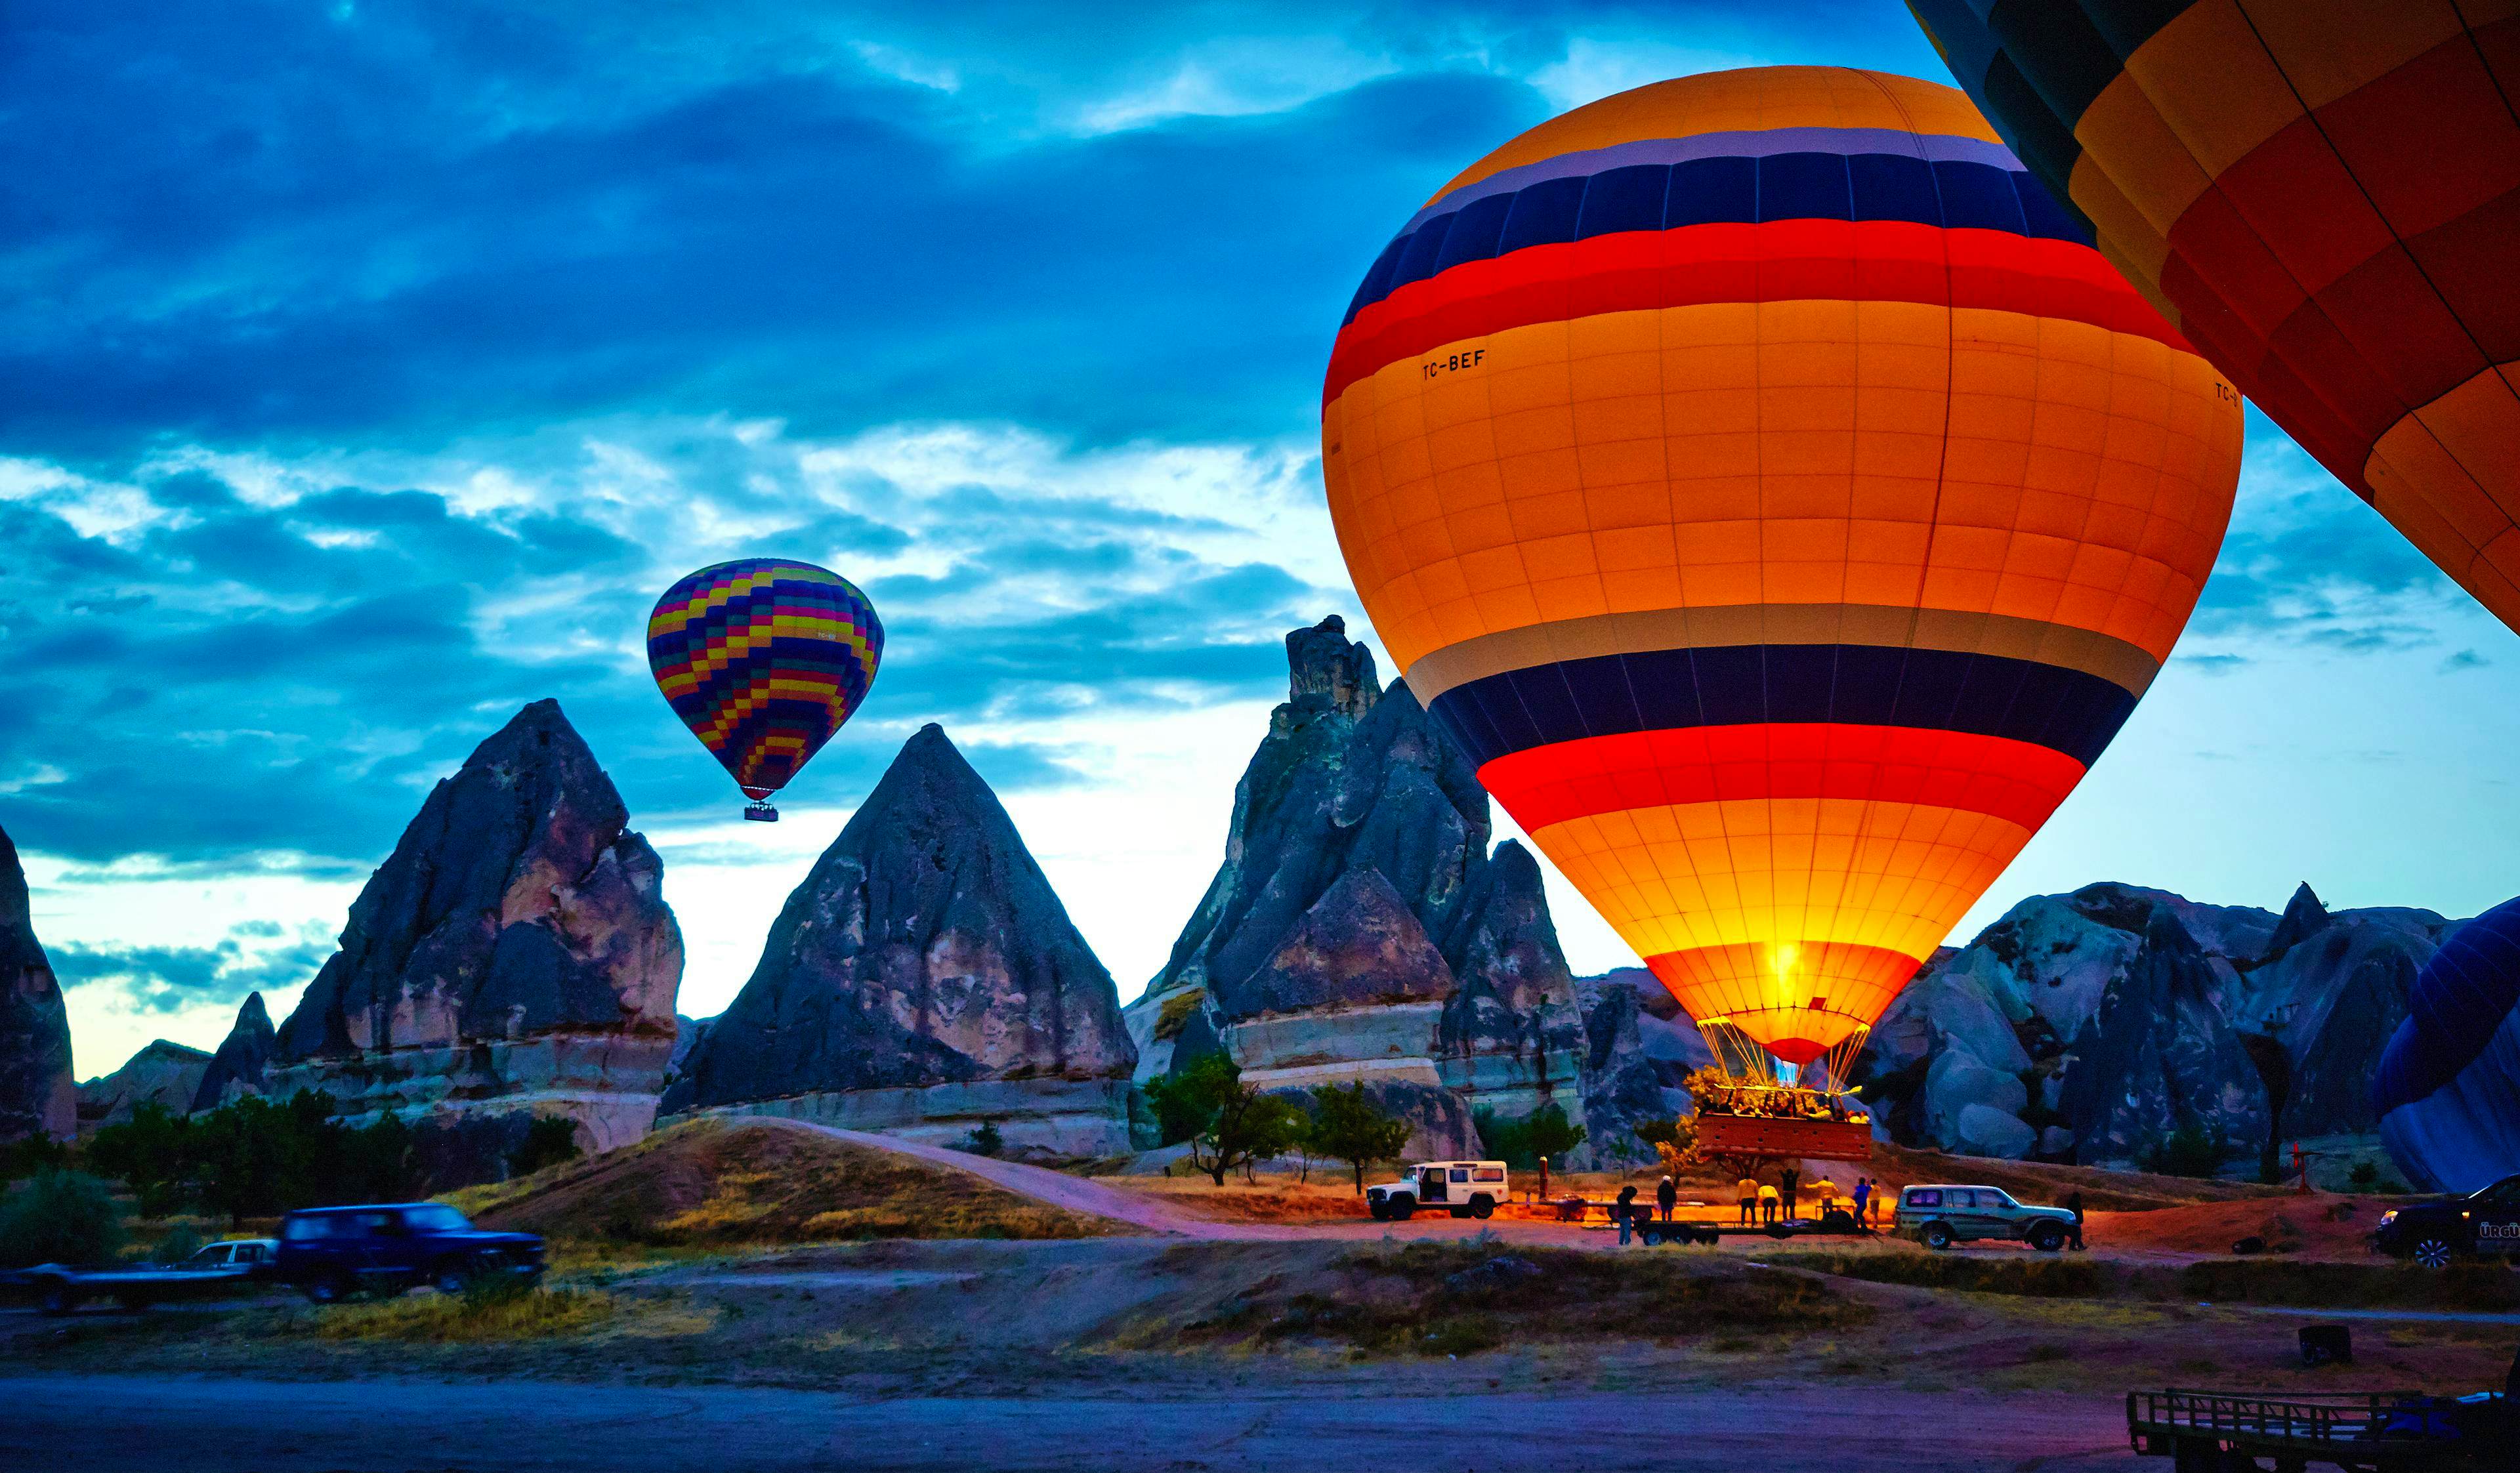 Hot Air Balloon + Full Day Cappadocia Green Tour with Derinkuyu Underground City, Ihlara Valley, Belisirma Village, Selime Monastery, Yaprakhisar on Shared Transfers